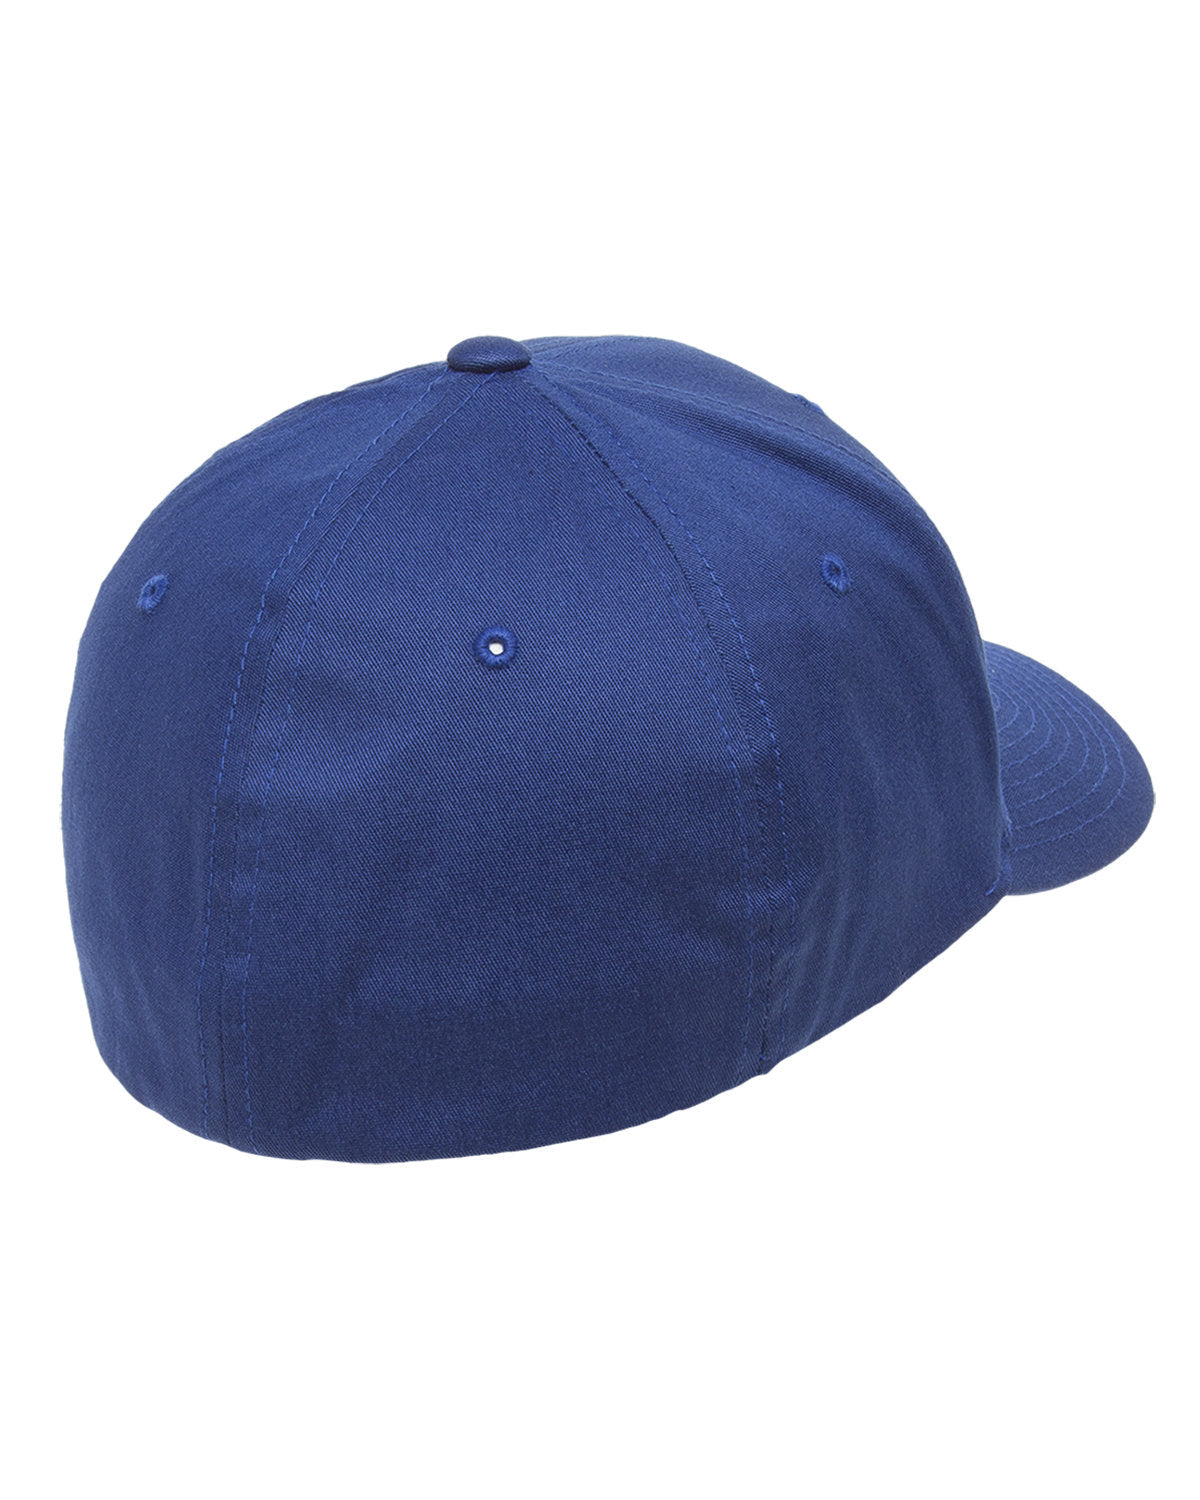 Flexfit Value Cotton Twill Customized Caps, Royal